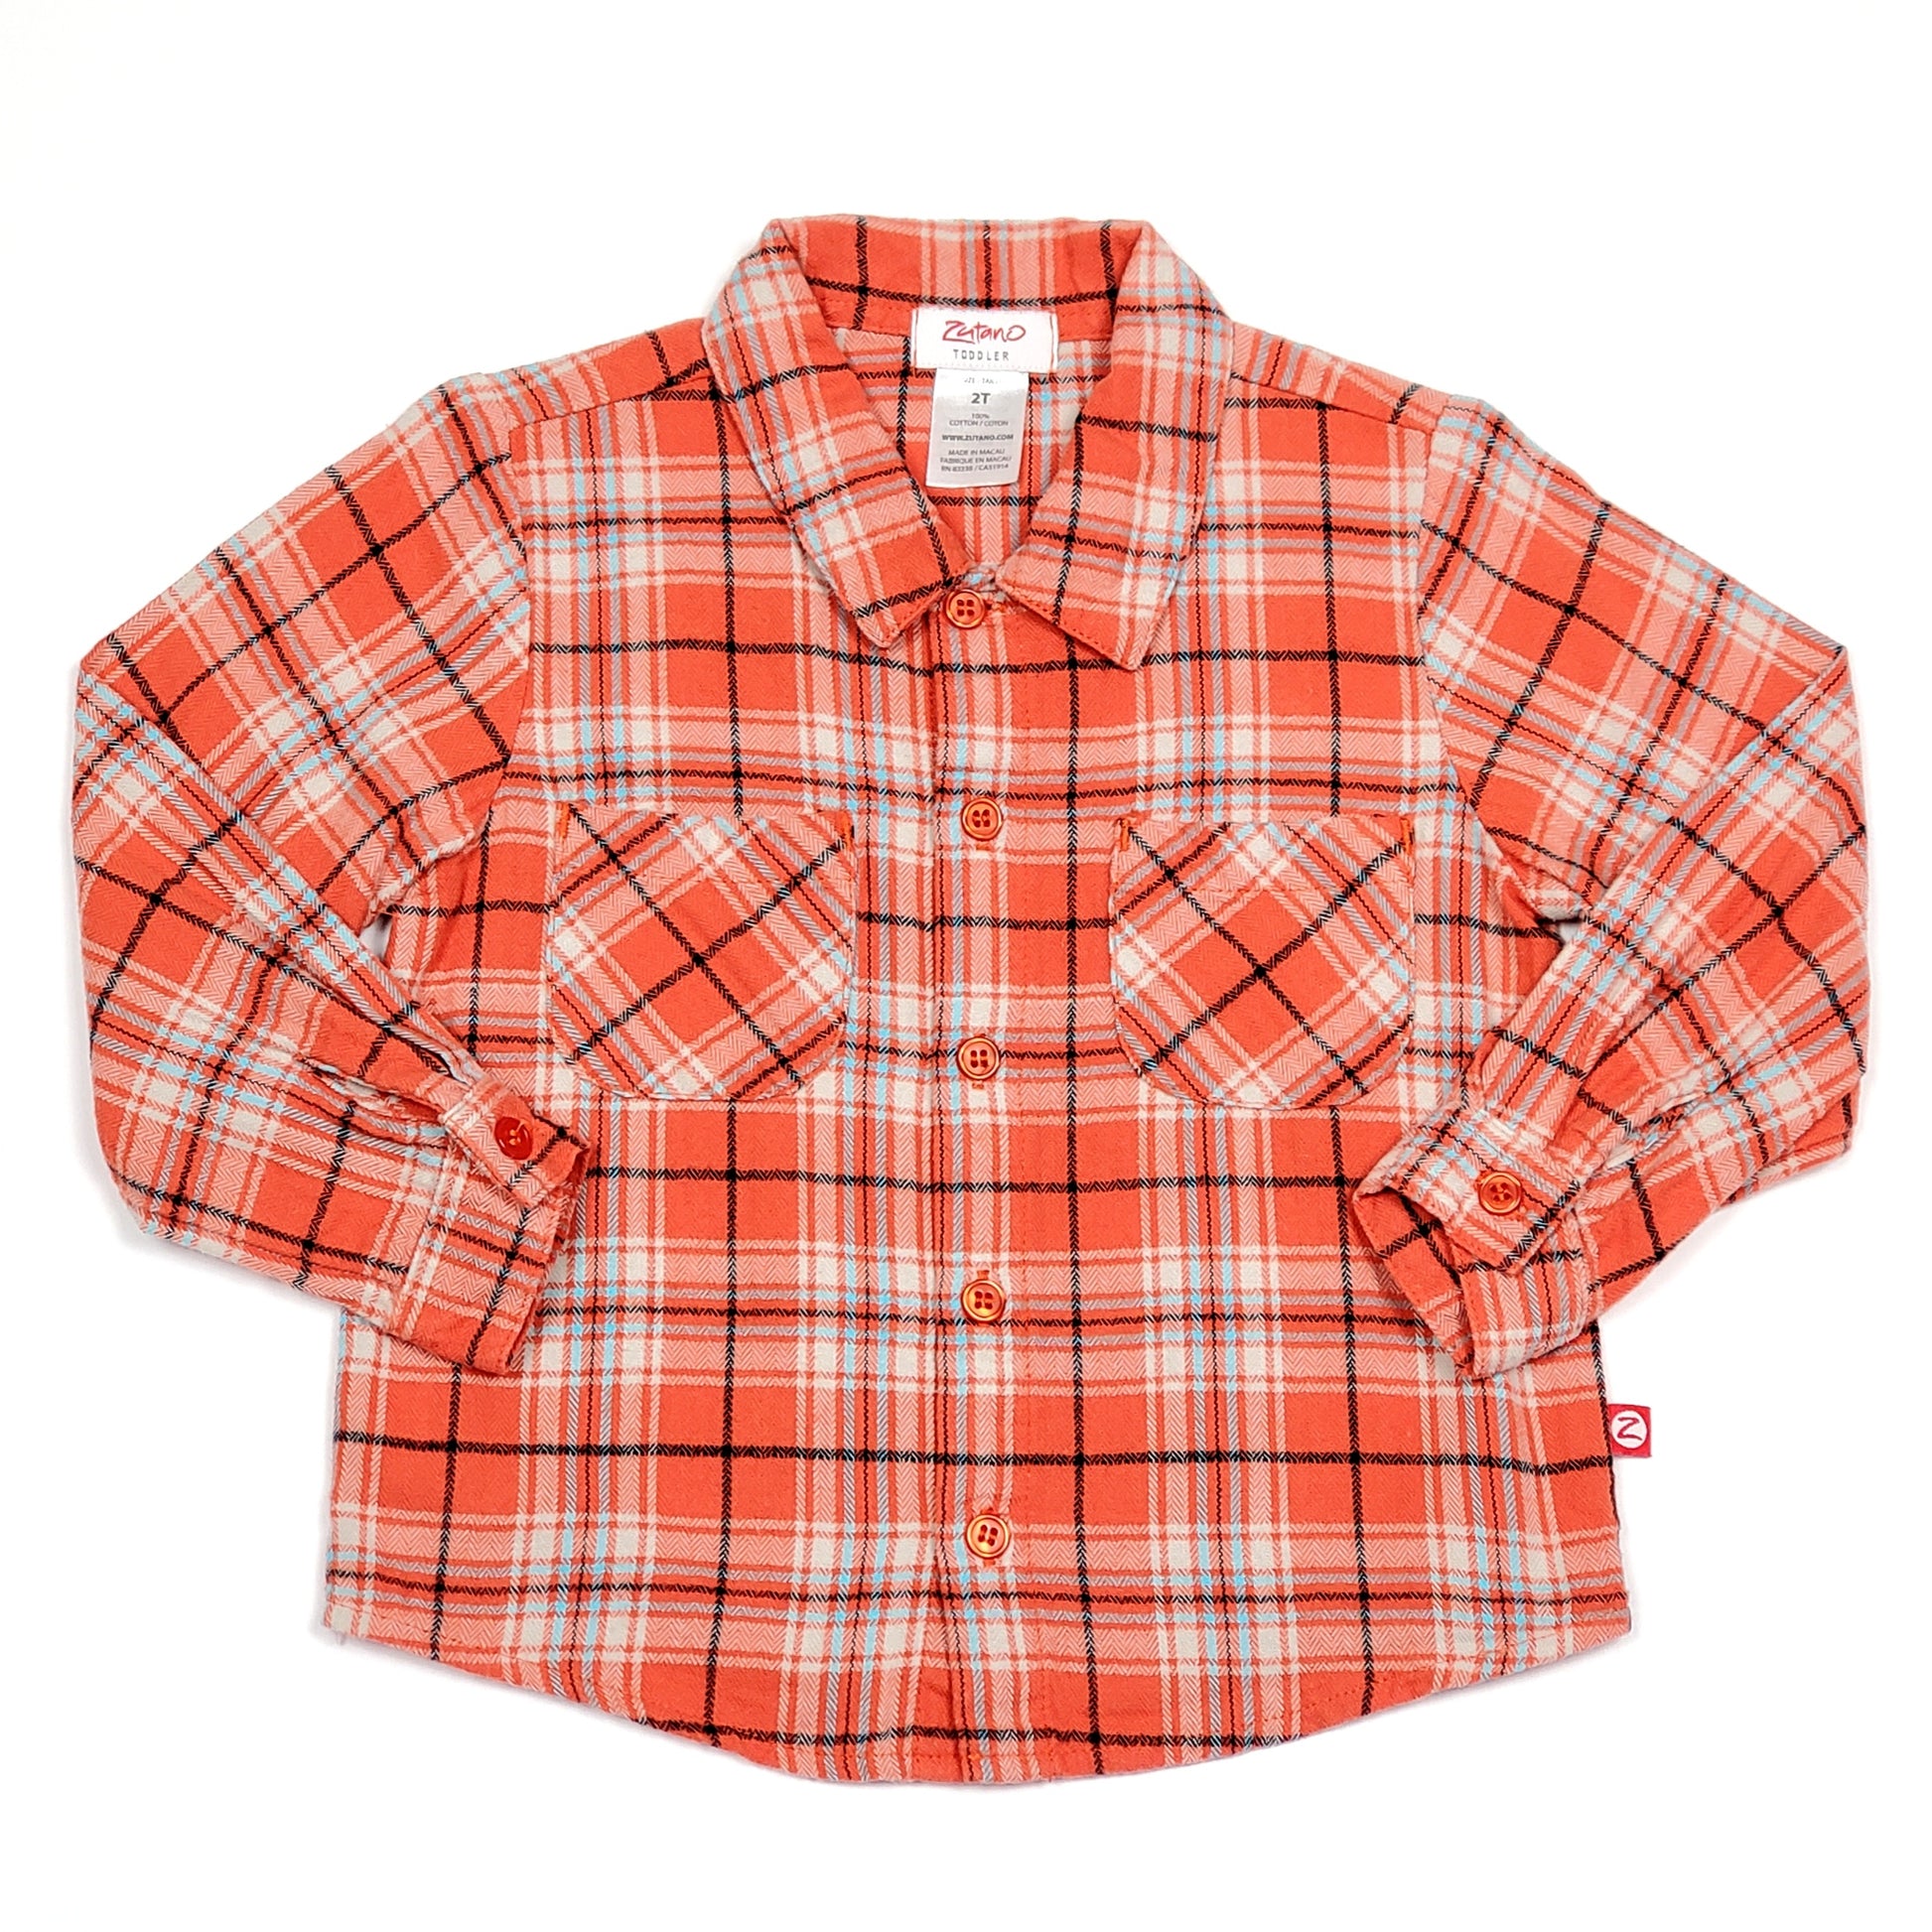 Zutano Orange Grey Boys Flannel Shirt 2T Used View 1